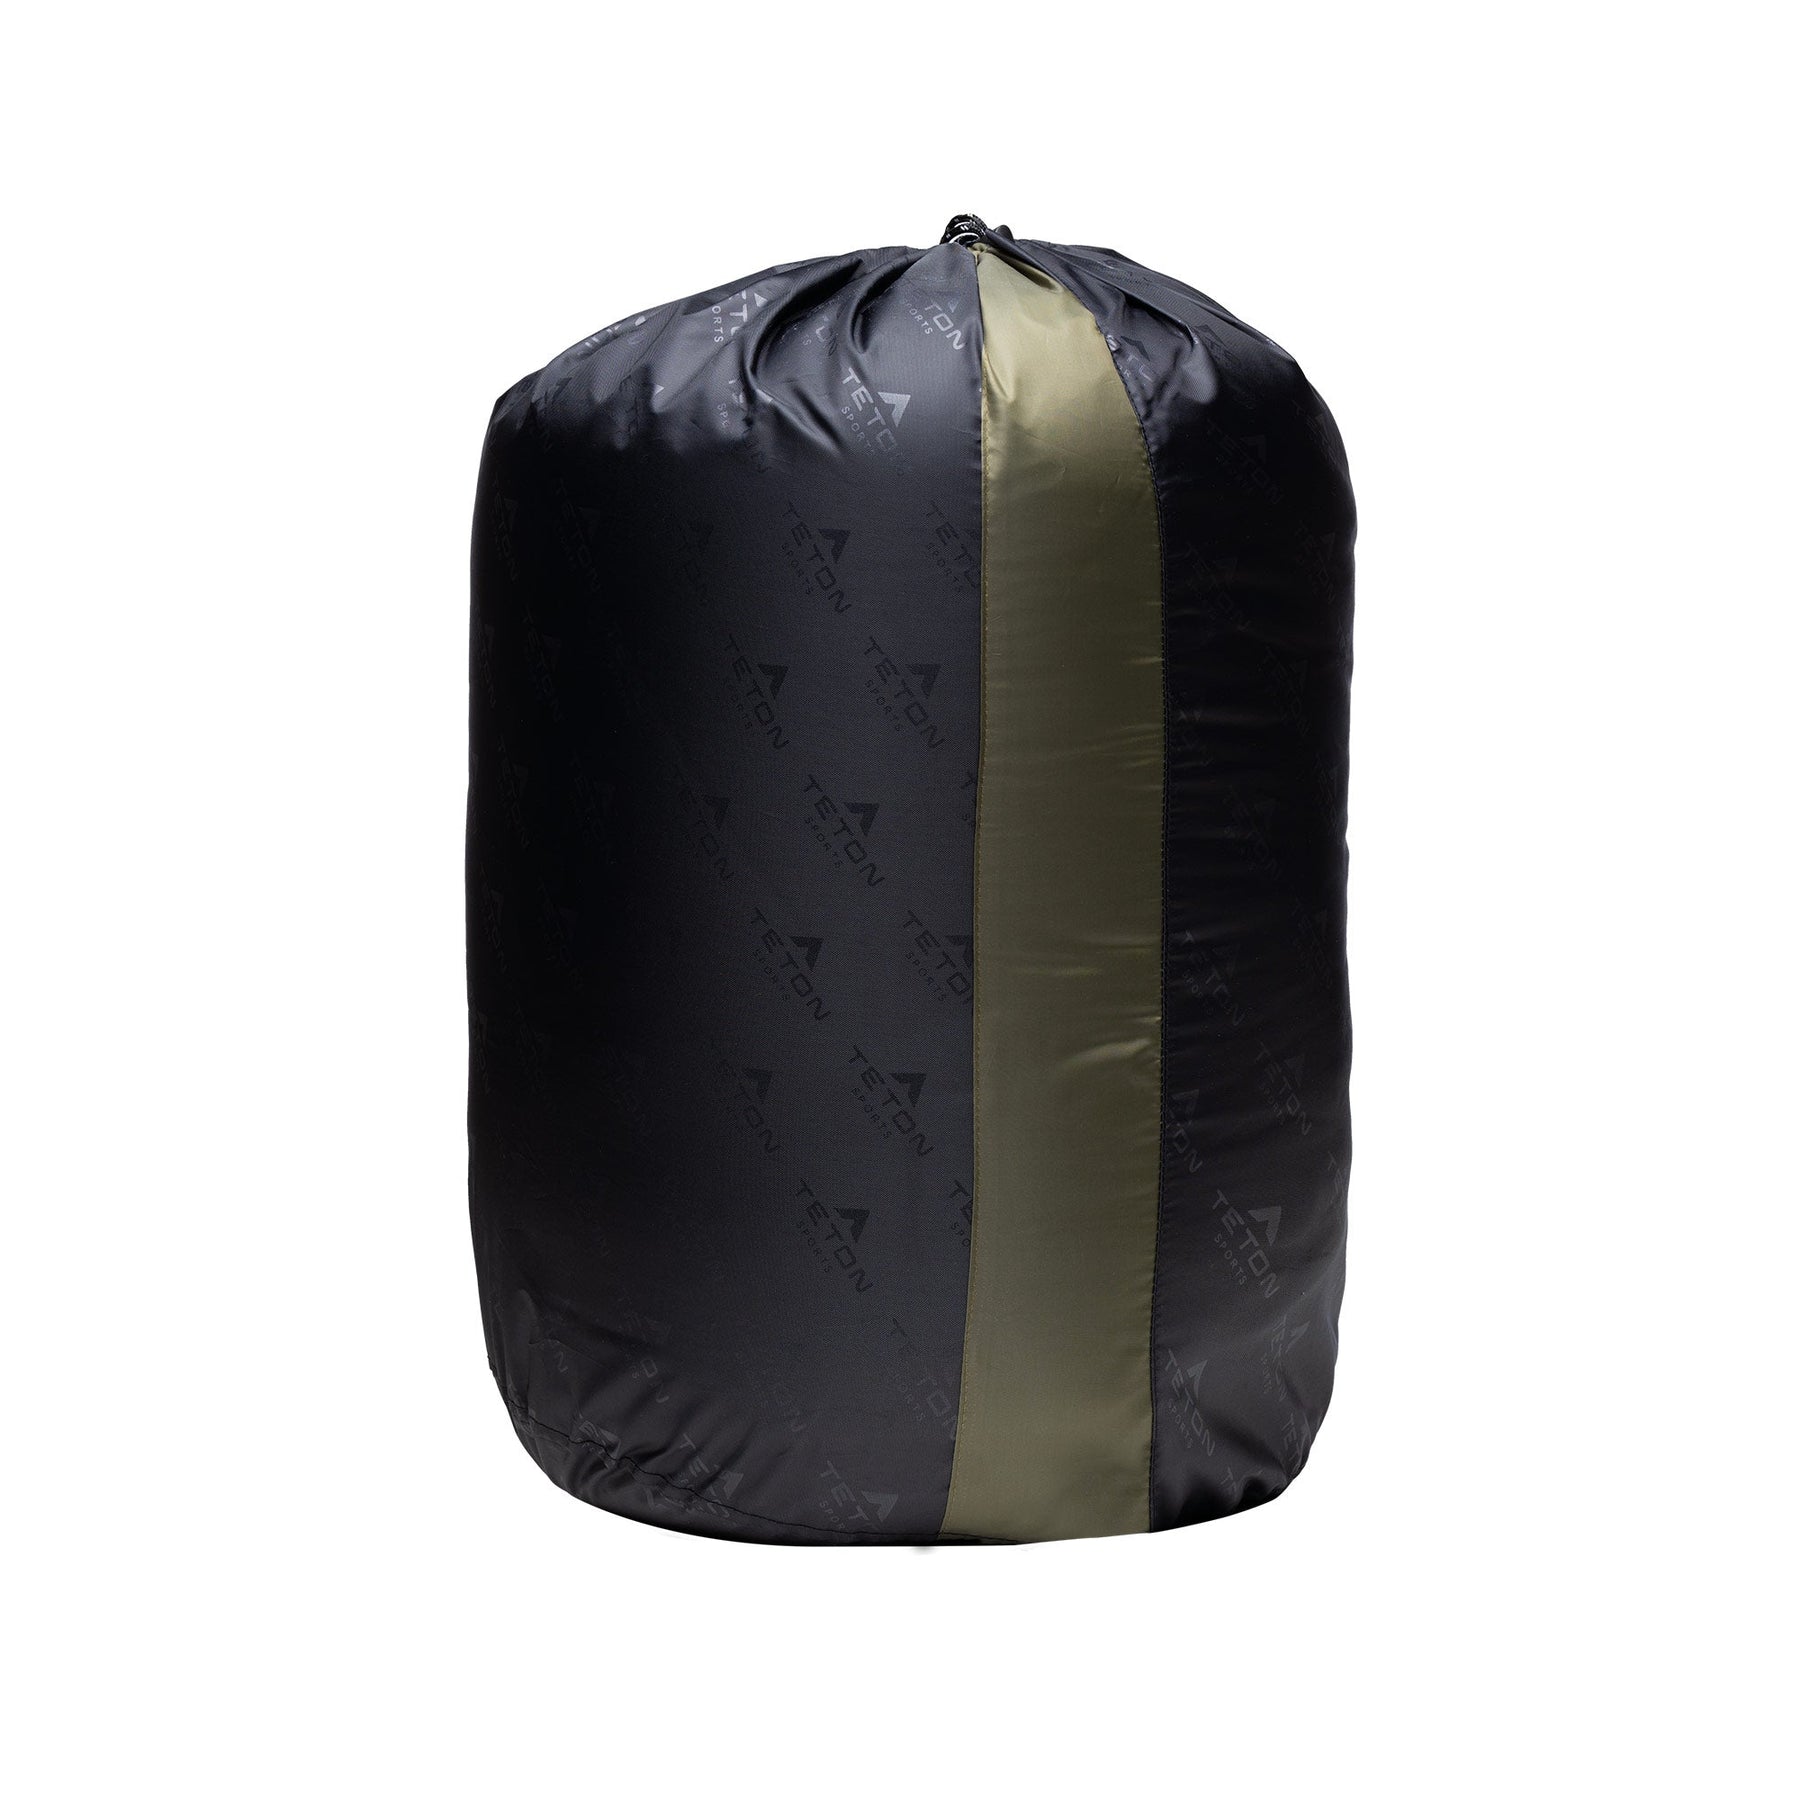 TETON Sports Celsius -25°F Sleeping Bag